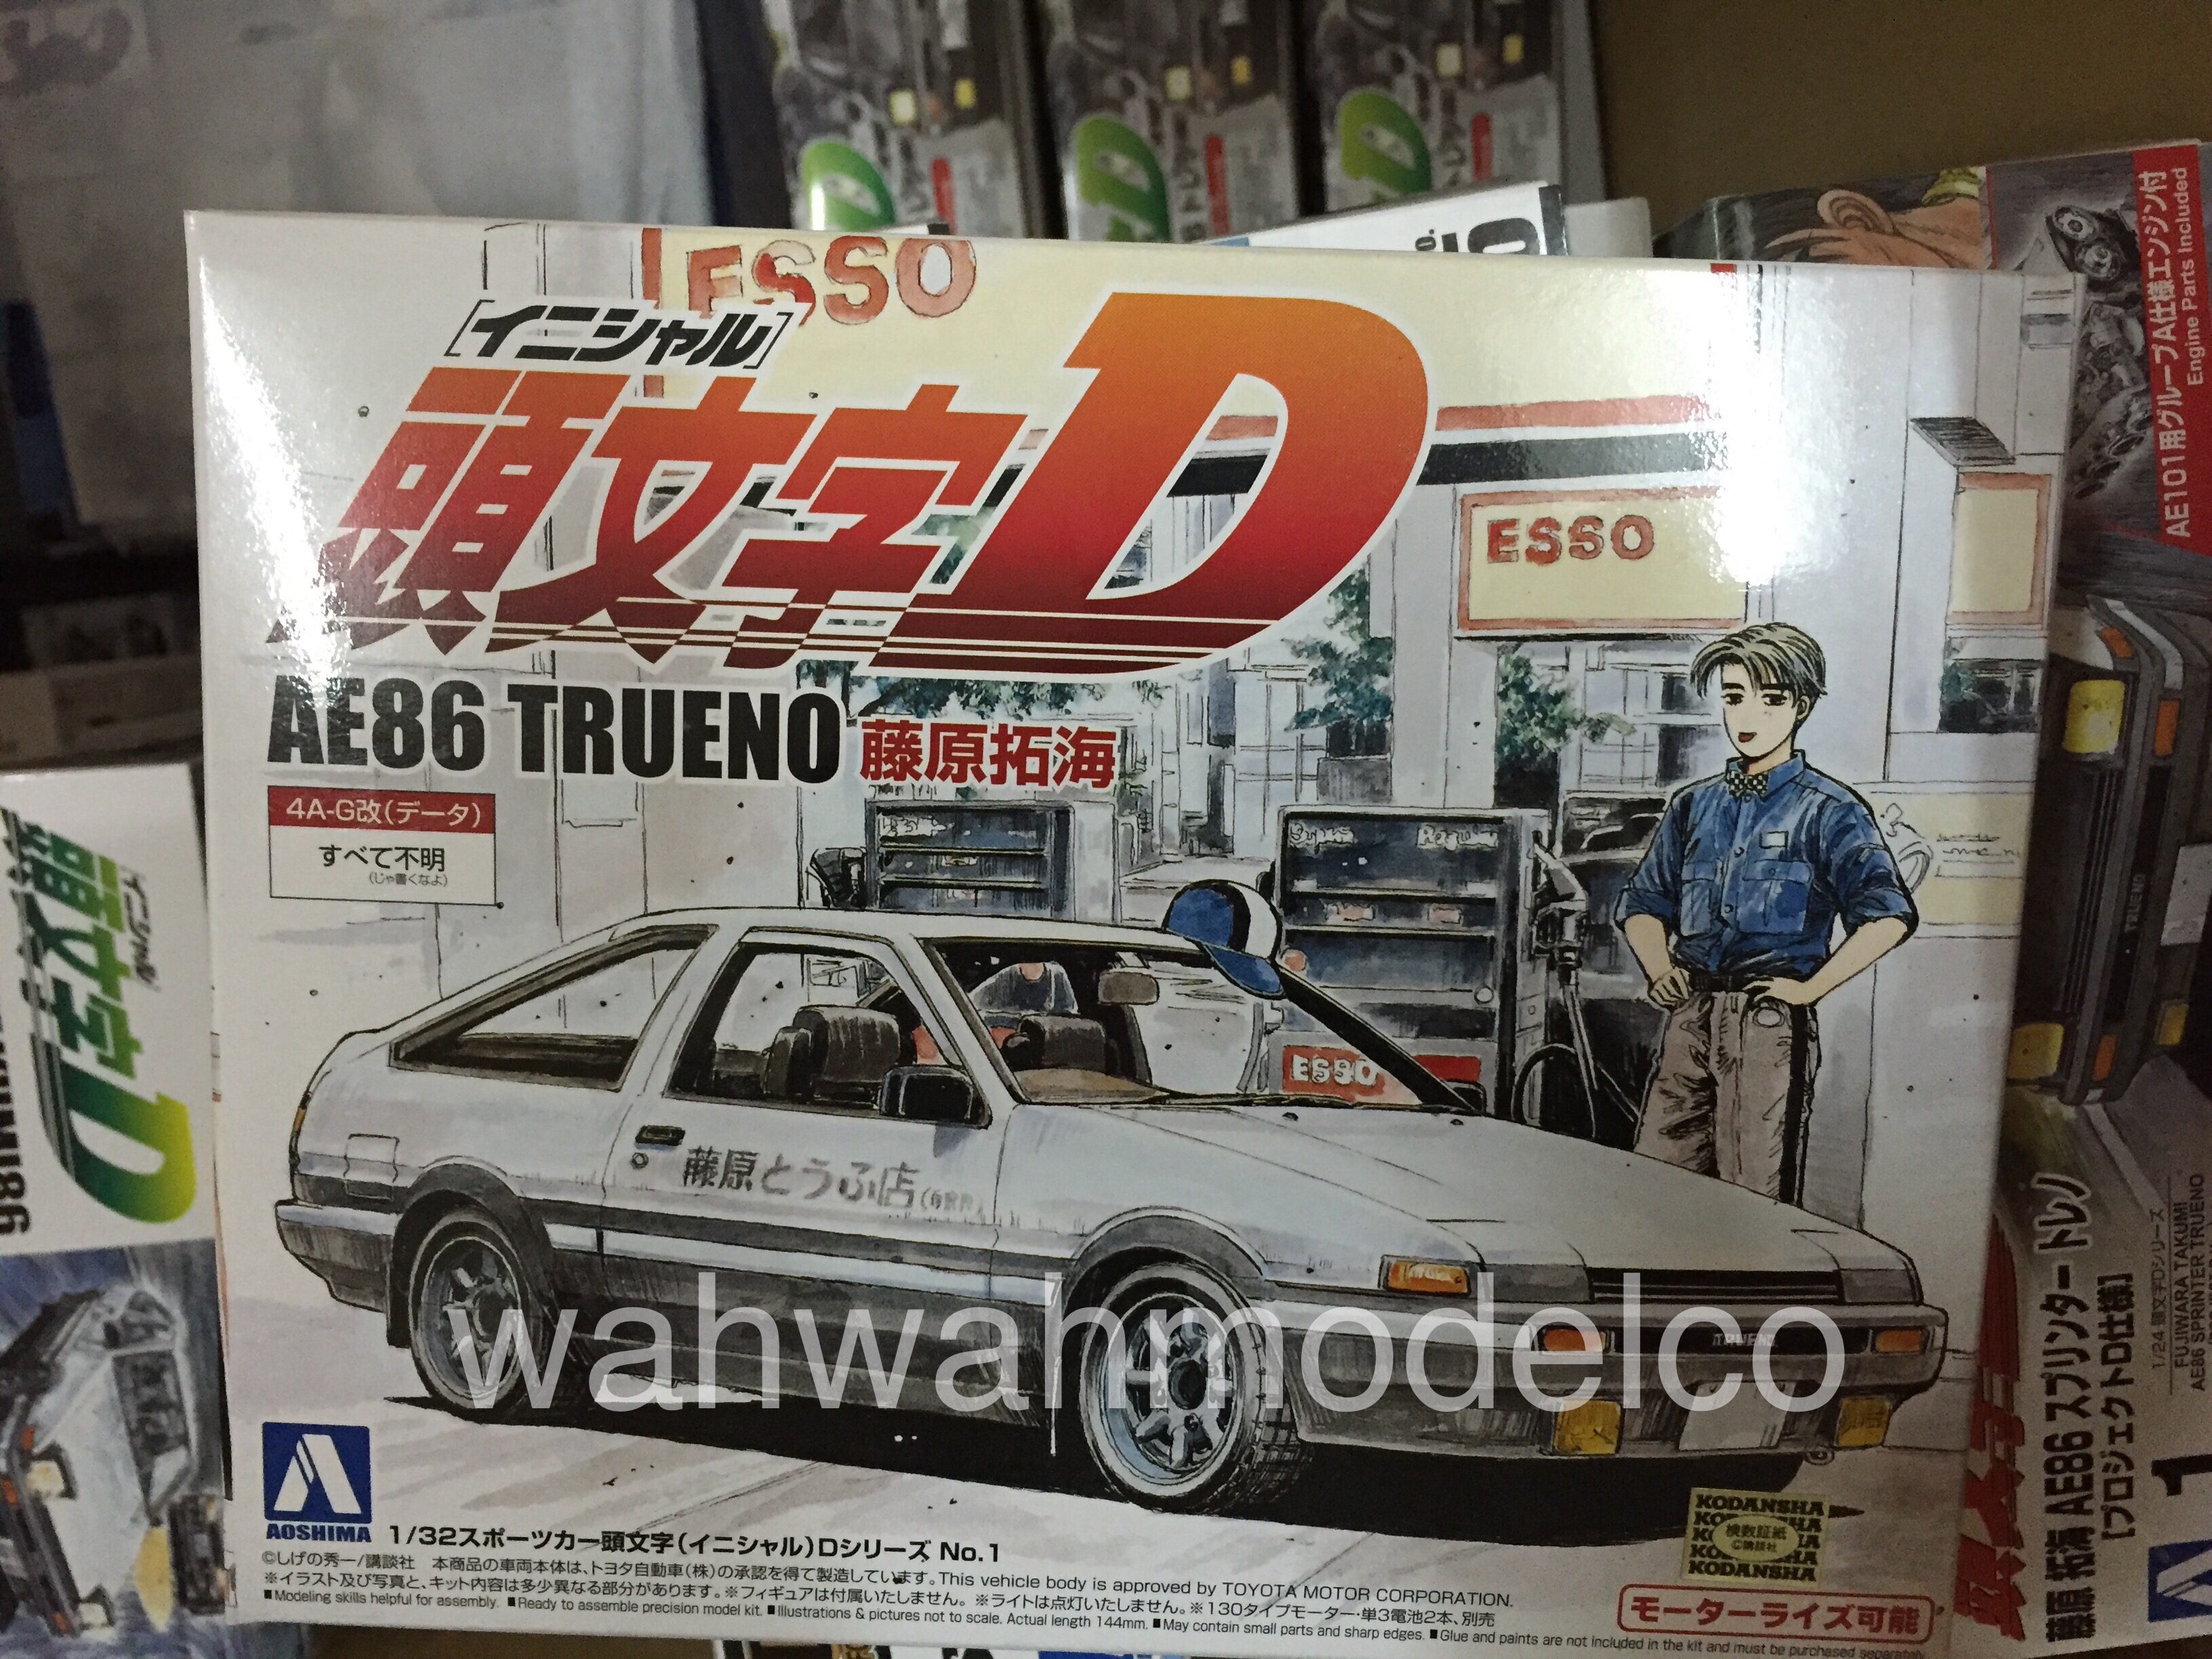 Aoshima 0066 1 32 Initial D 1 Fujiwara Takumi Ae86 Trueno Model Kit Wah Wah Model Shop